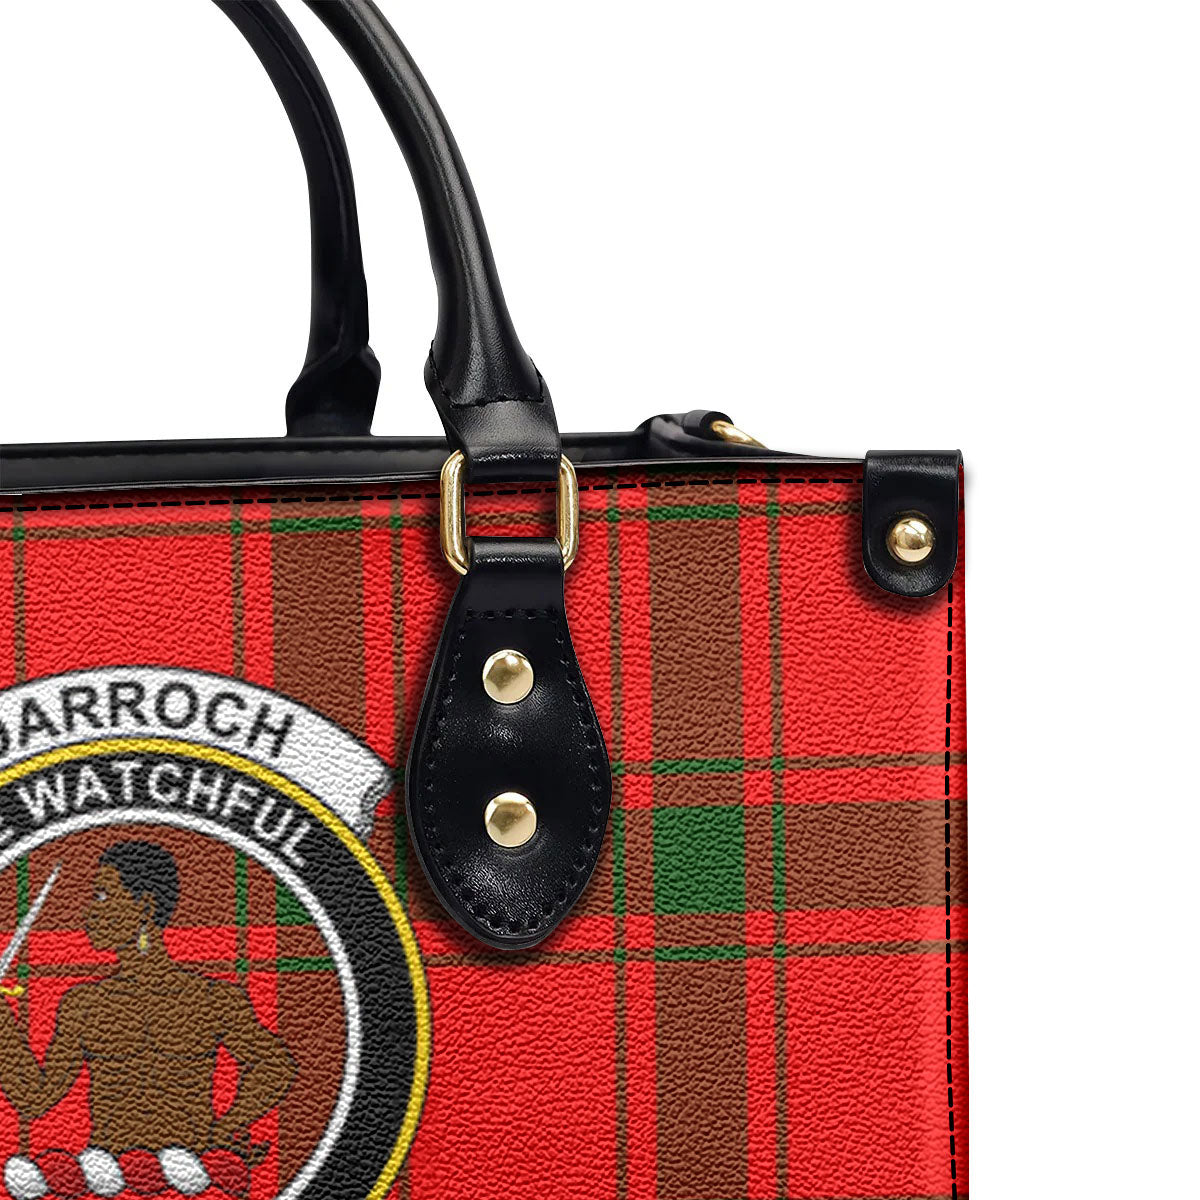 Darroch (Gourock) Tartan Crest Leather Handbag